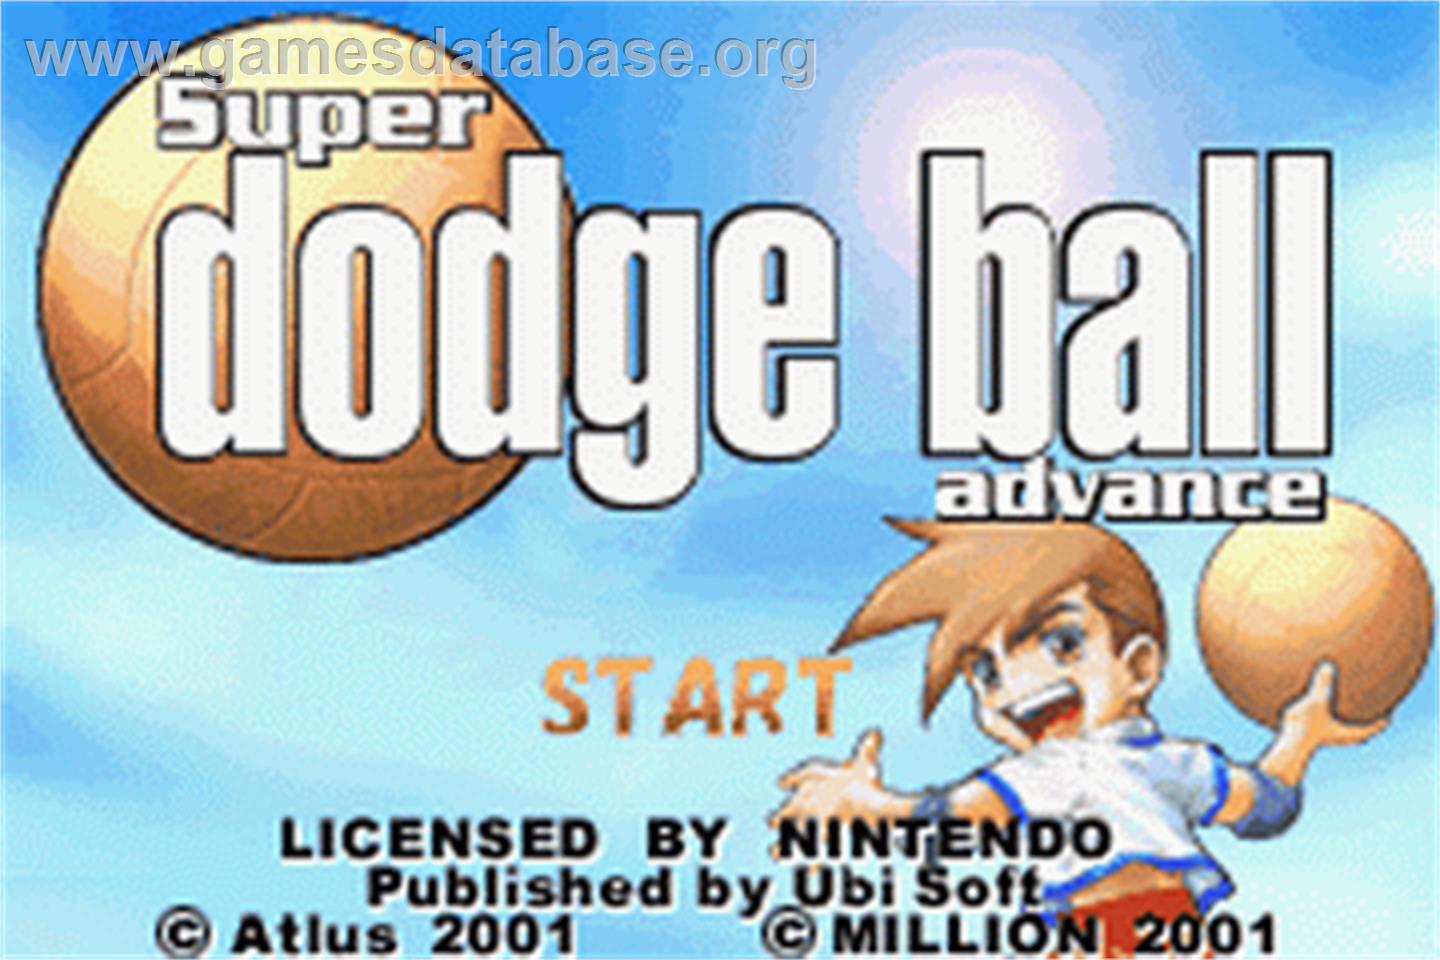 Super Dodge Ball Advance - Nintendo Game Boy Advance - Artwork - Title Screen